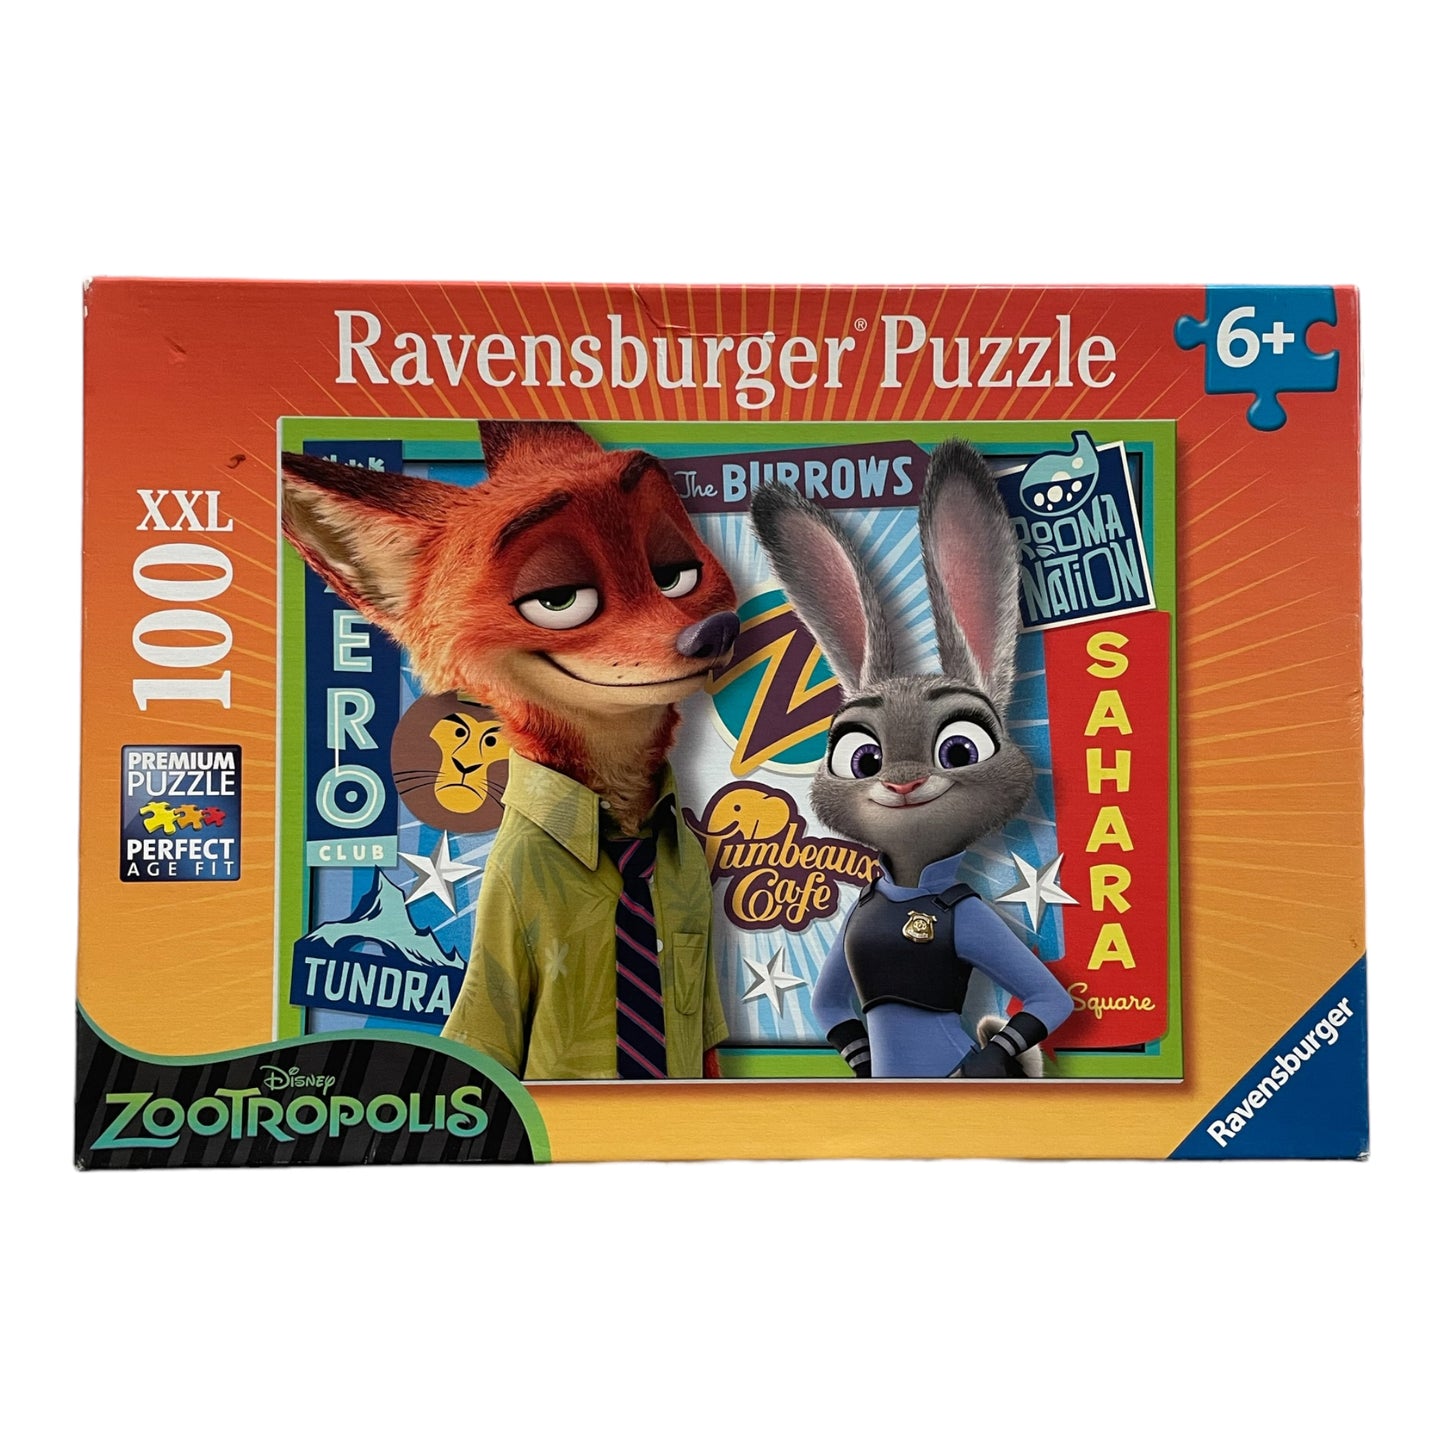 Ravensburger Zootropolis  Puzzle XXL100 - Keeping Critters Safe!